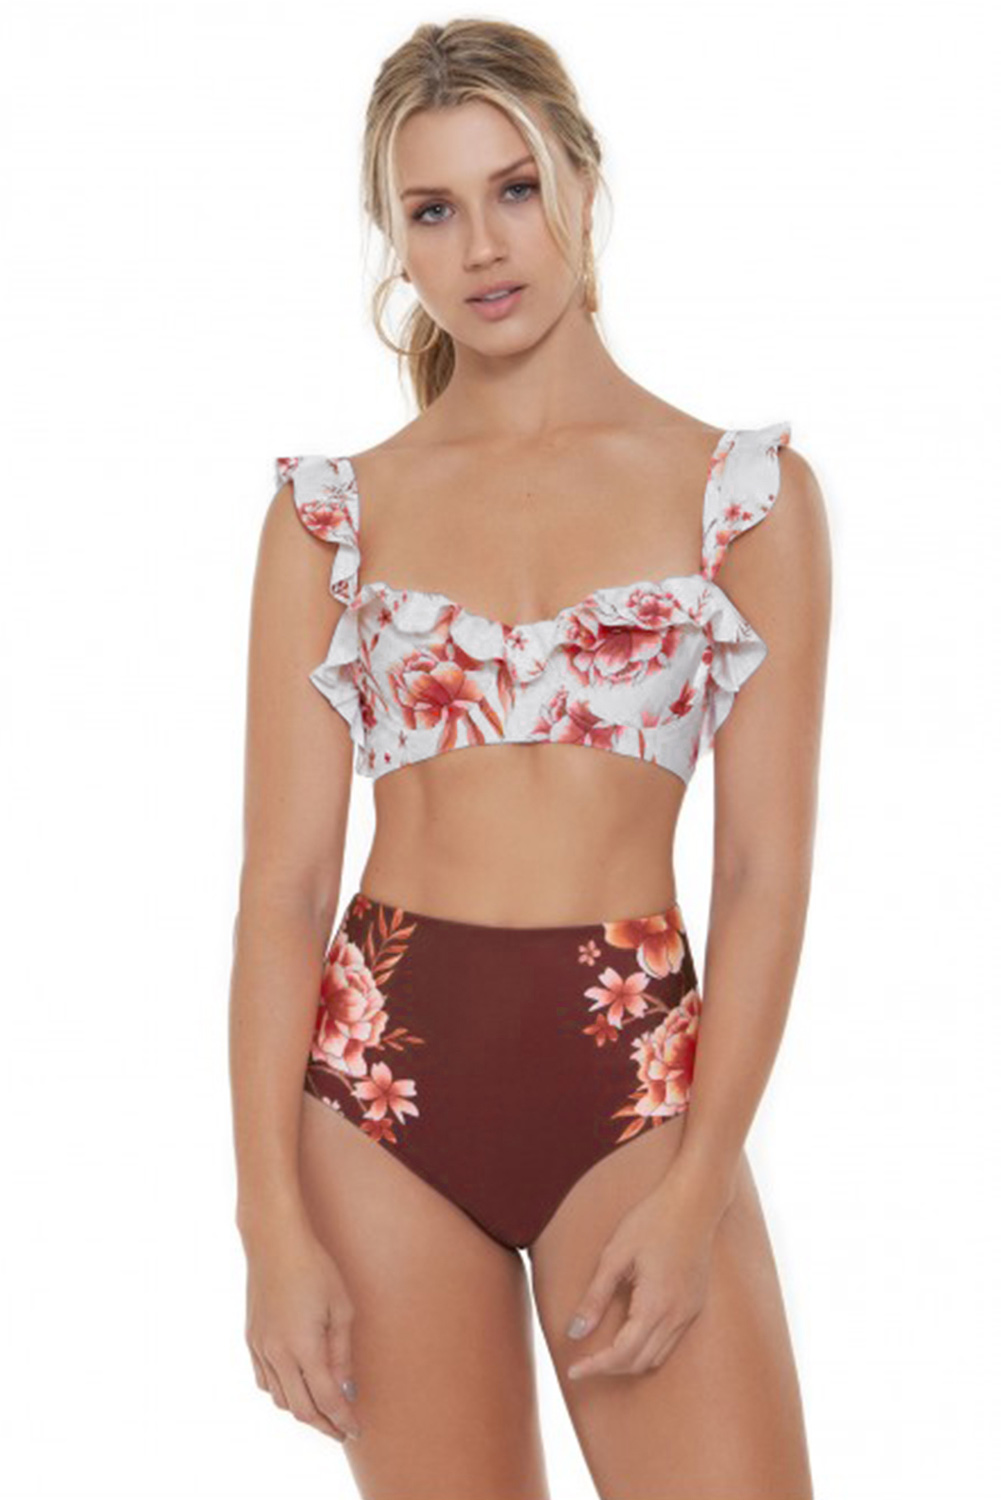 Us 995 Red Floral High Waist Ruffle Underwire Bikini Swimsuit Wholesale 3410